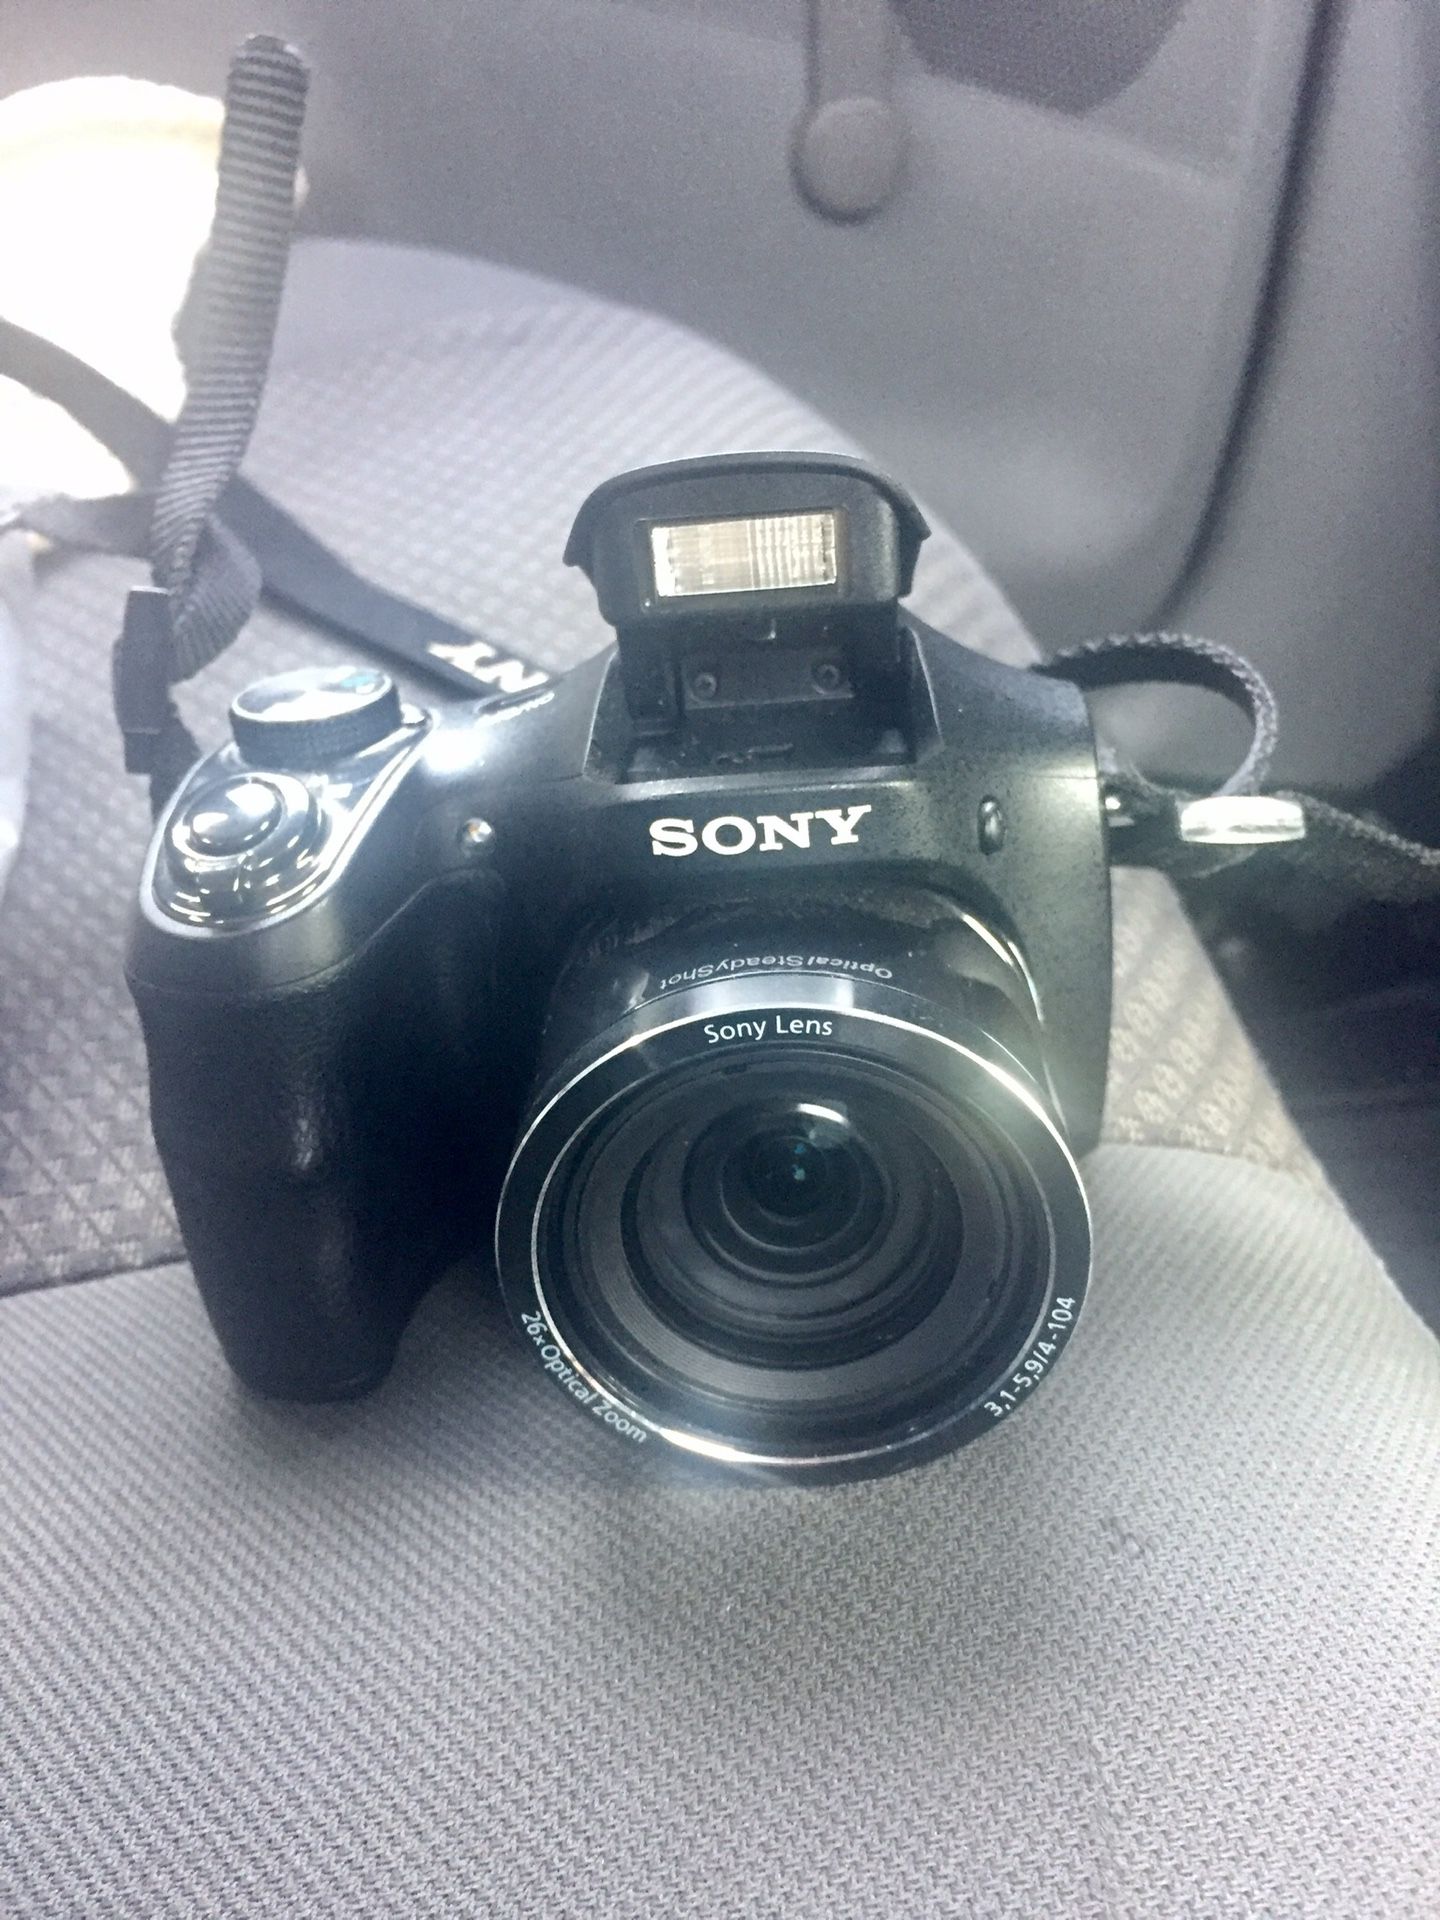 Sony camera 20.1 megapixel